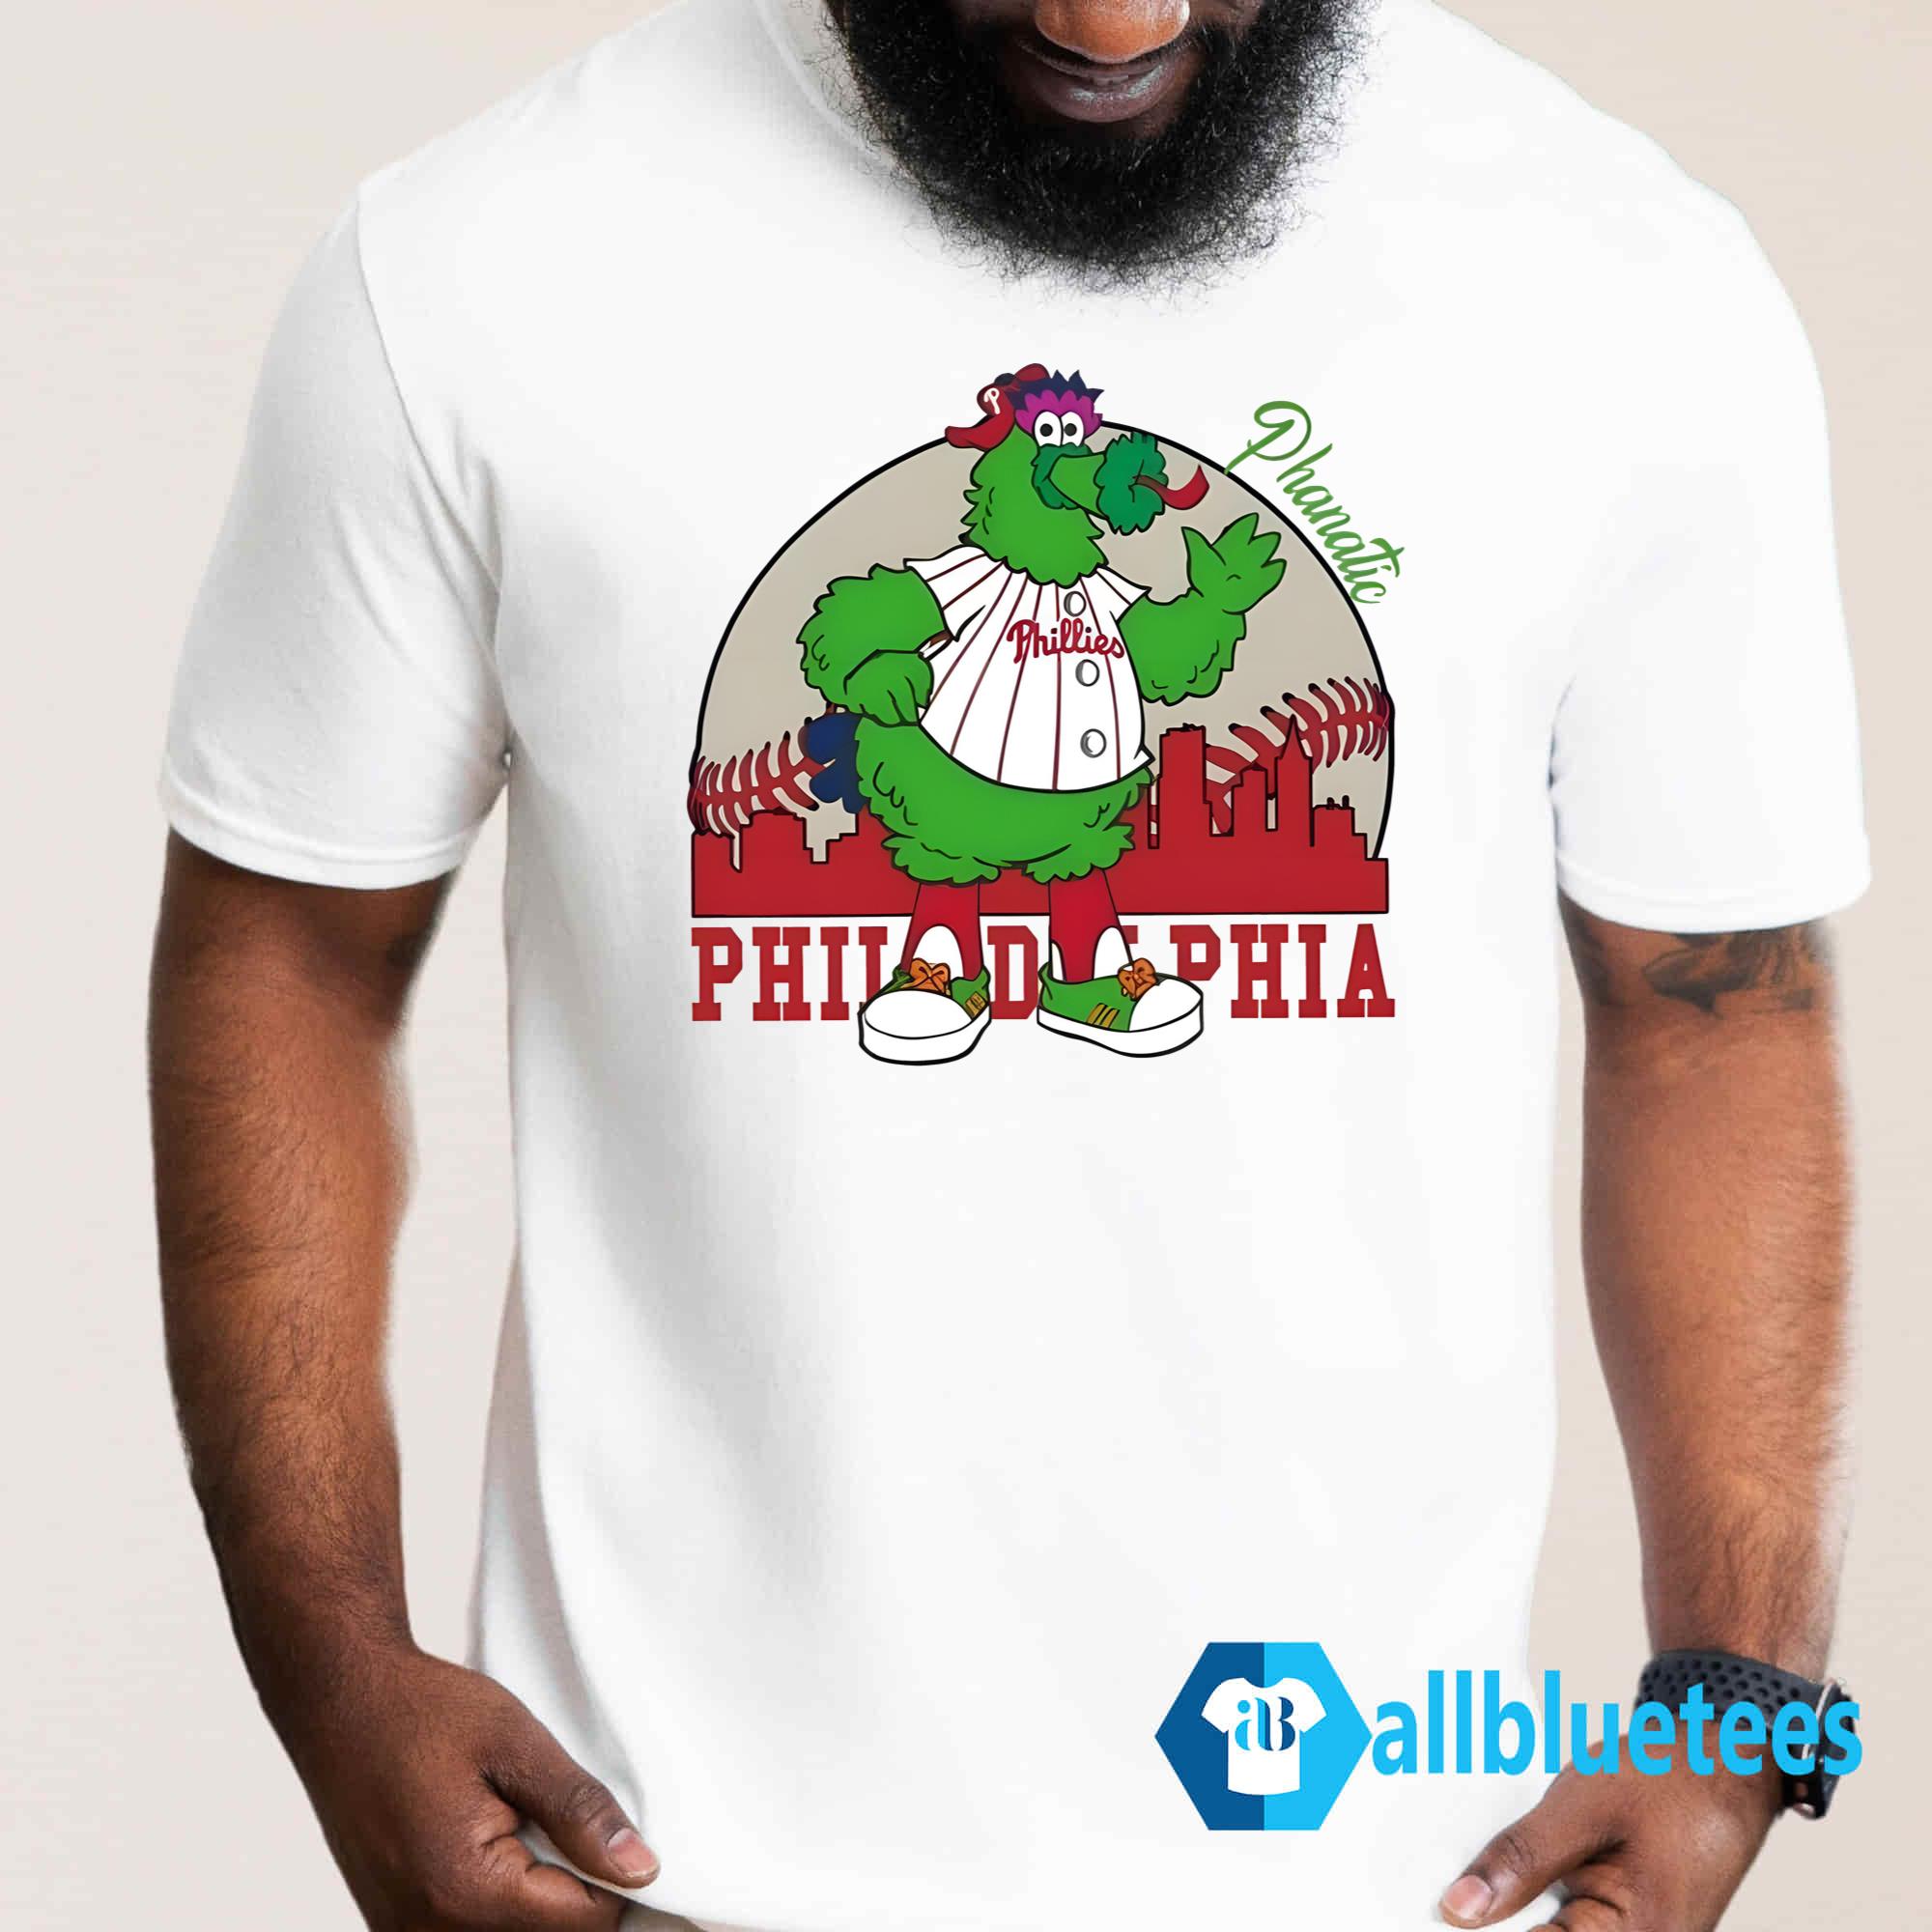 Phillies Hoodie Sweatshirt Tshirt Mens Womens Throwback